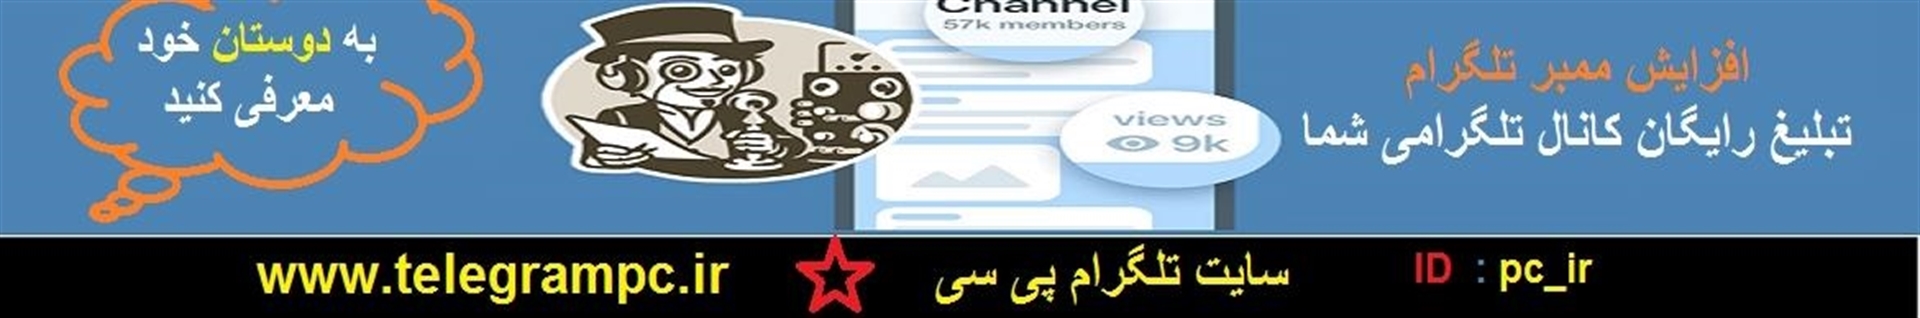 تبلیغ کانال تلگرام | ساخت ربات تلگرامی  | افزایش ممبر کانال تلگرام - http://telegrampc.ir